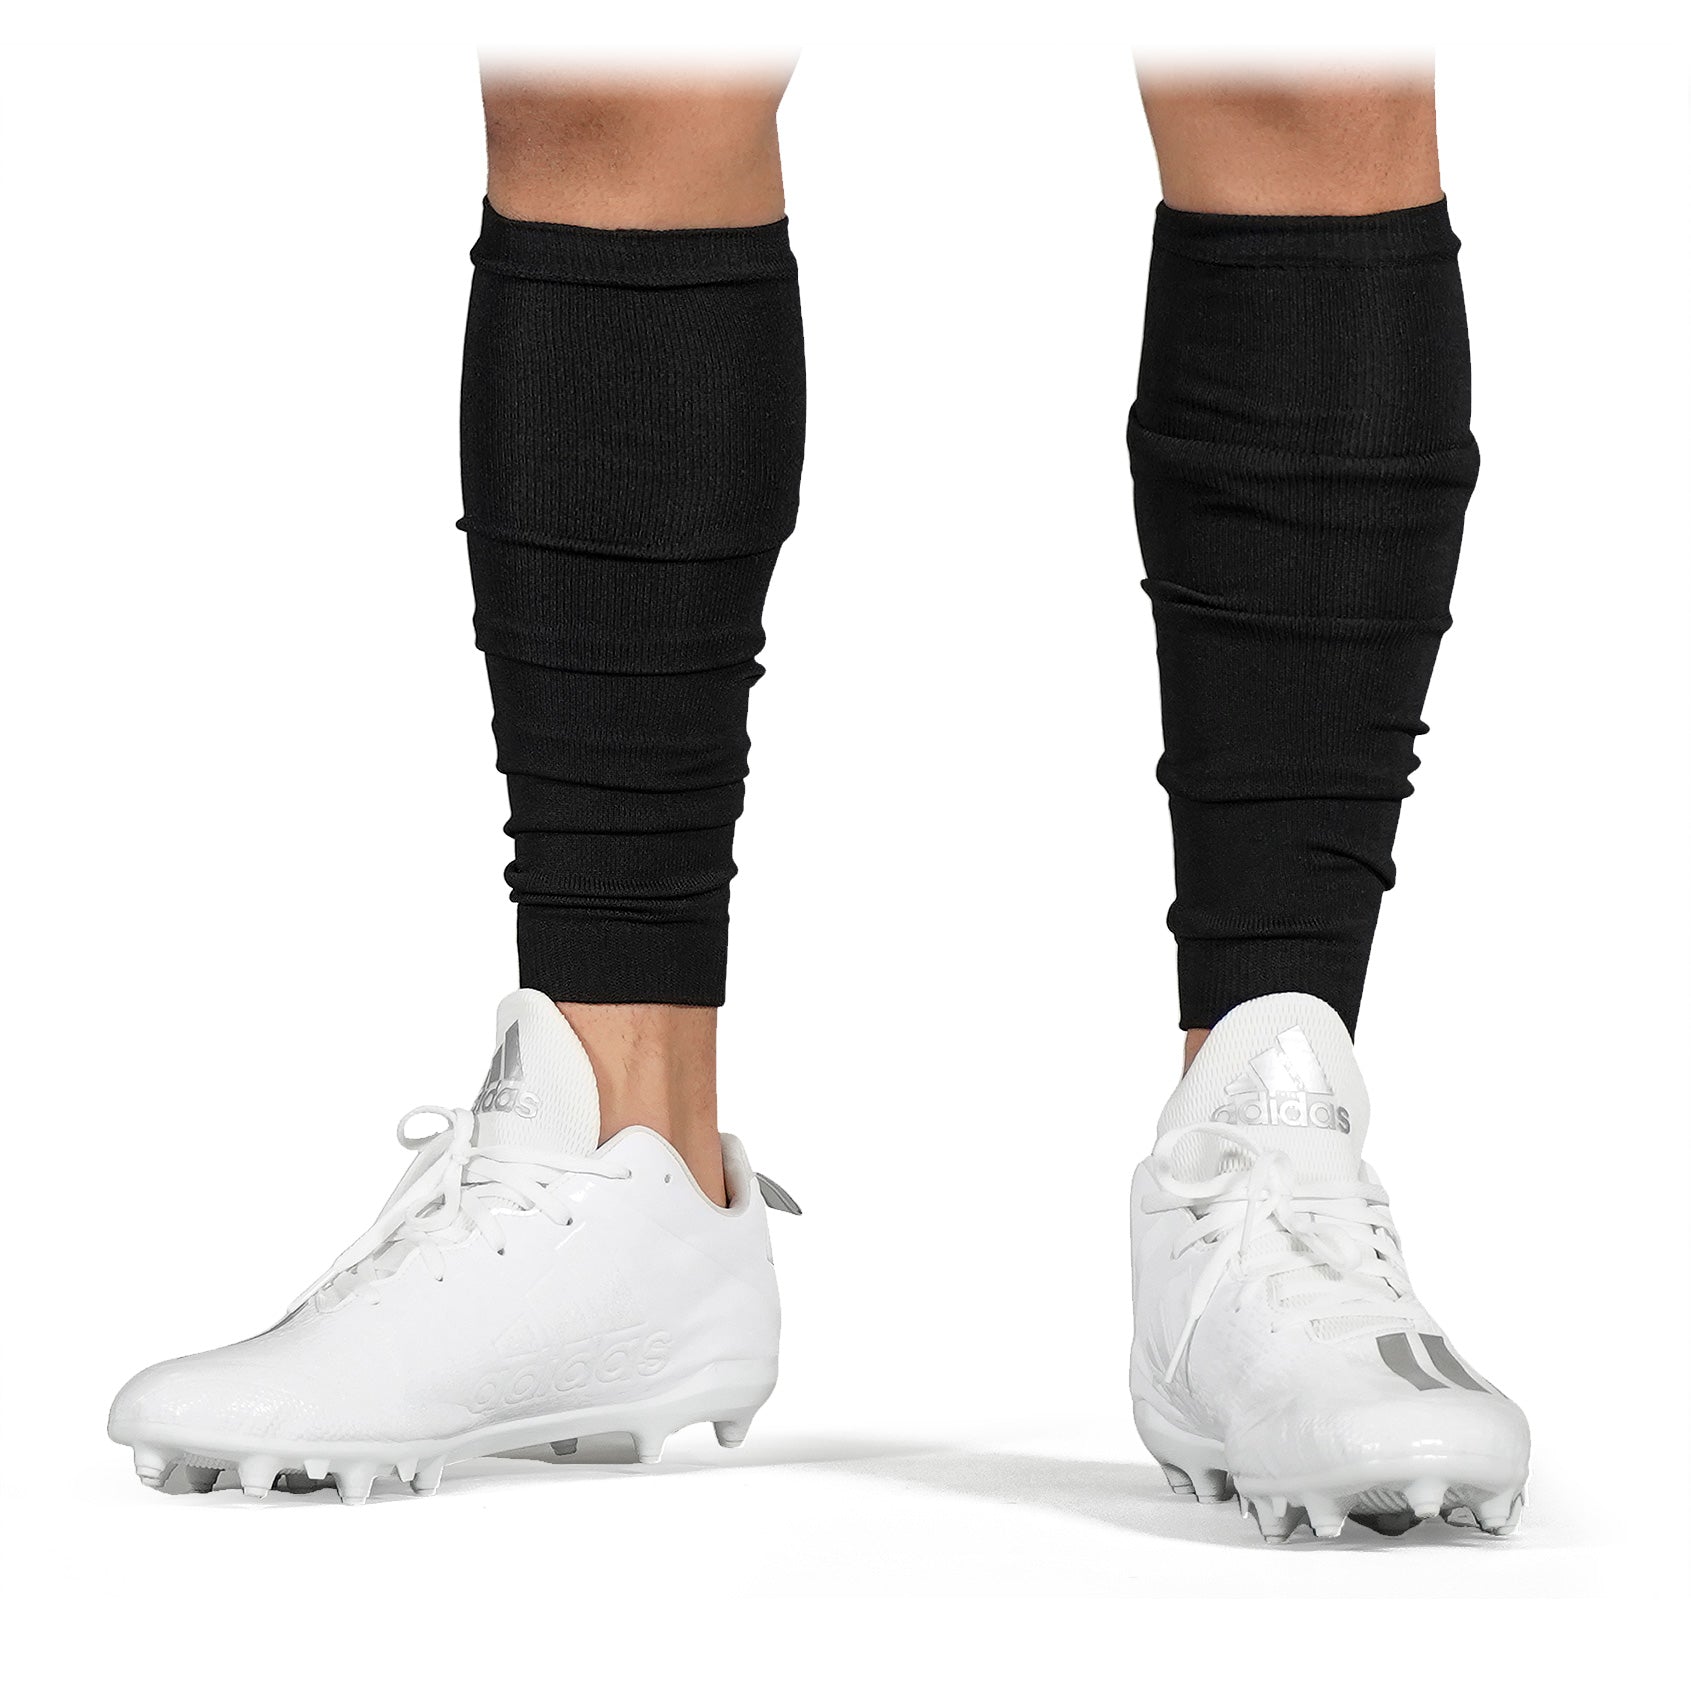 Grey Leg Sleeves - Nxtrnd  American football cleats, Football outfits, Football  leg sleeves